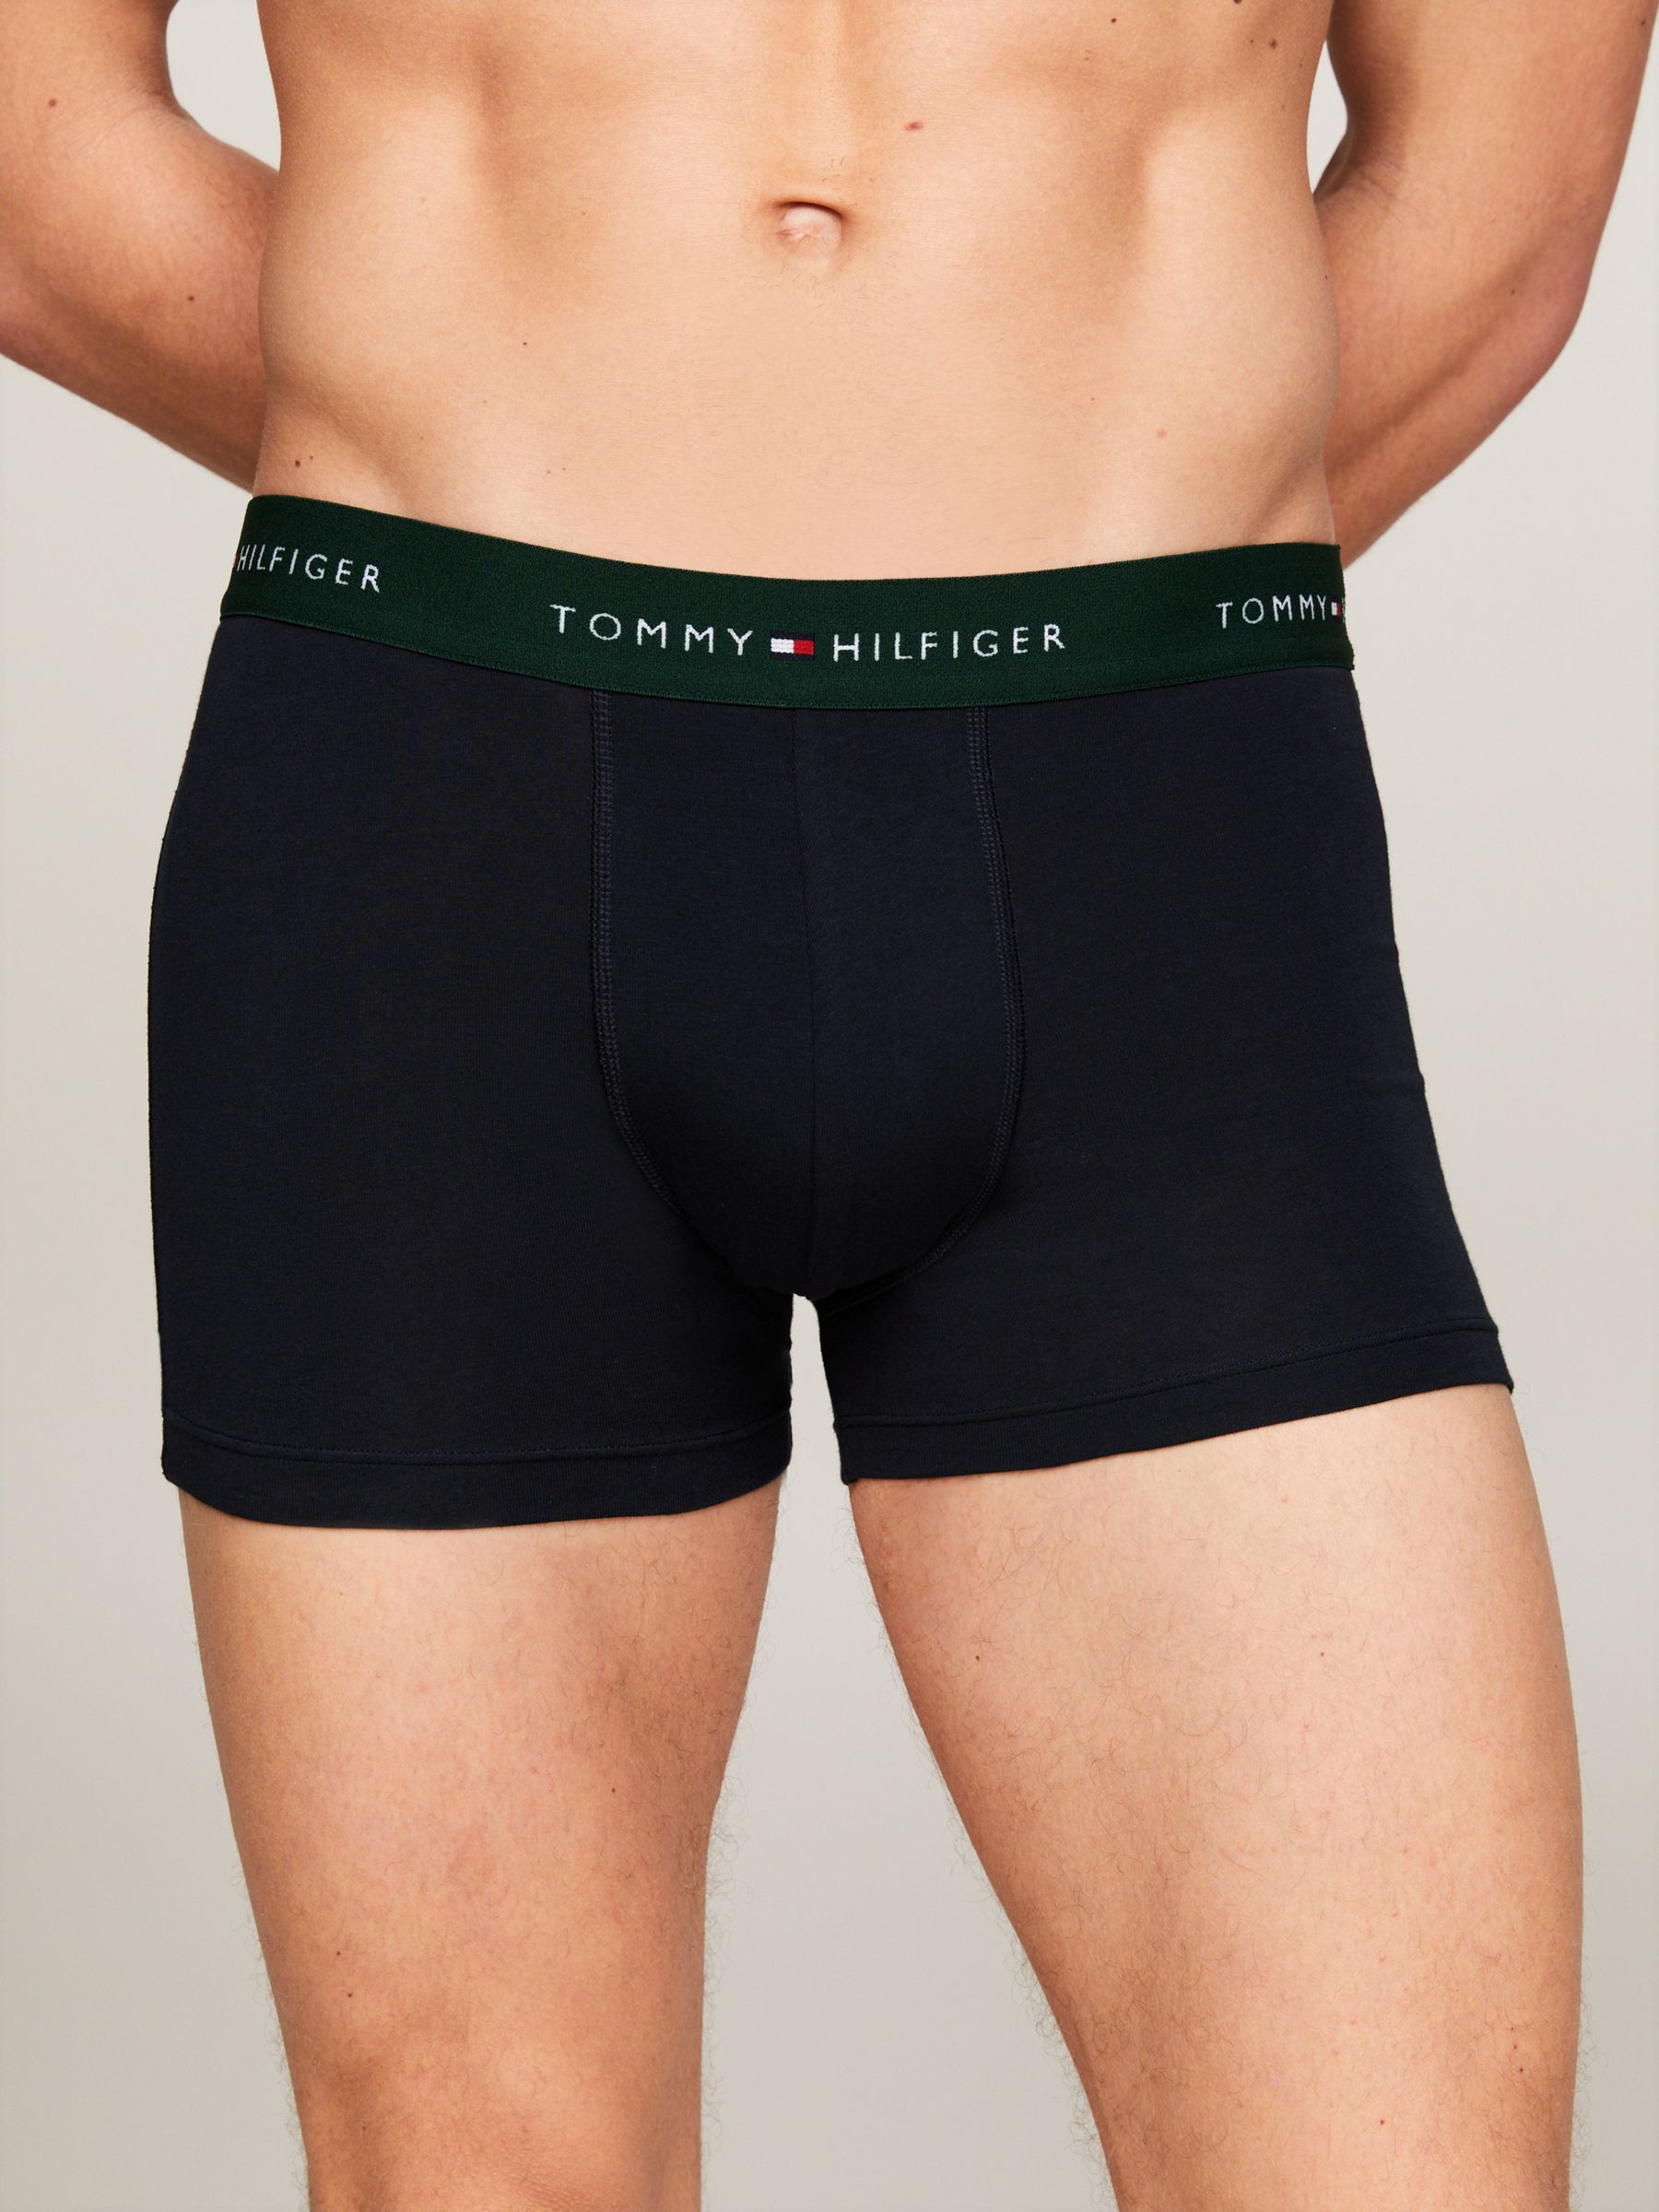 Buy Tommy Hilfiger Logo Waist Cotton Stretch Trunks, Pack of 5, Black/Multi Online at johnlewis.com